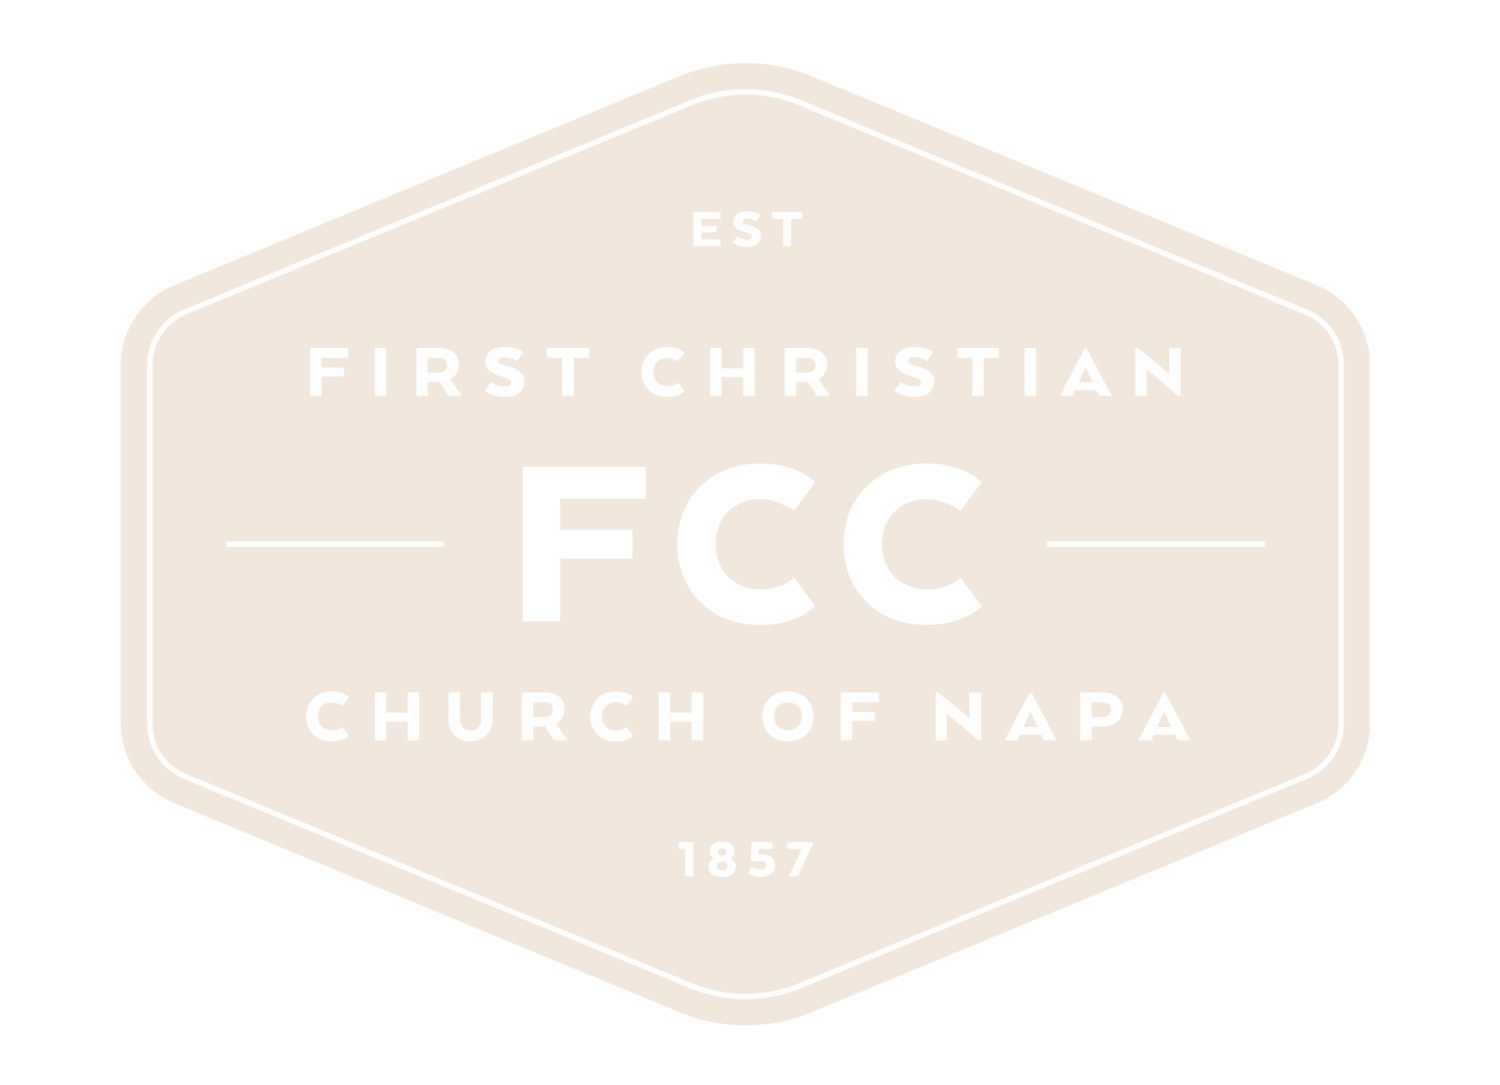 First Christian Church of Napa